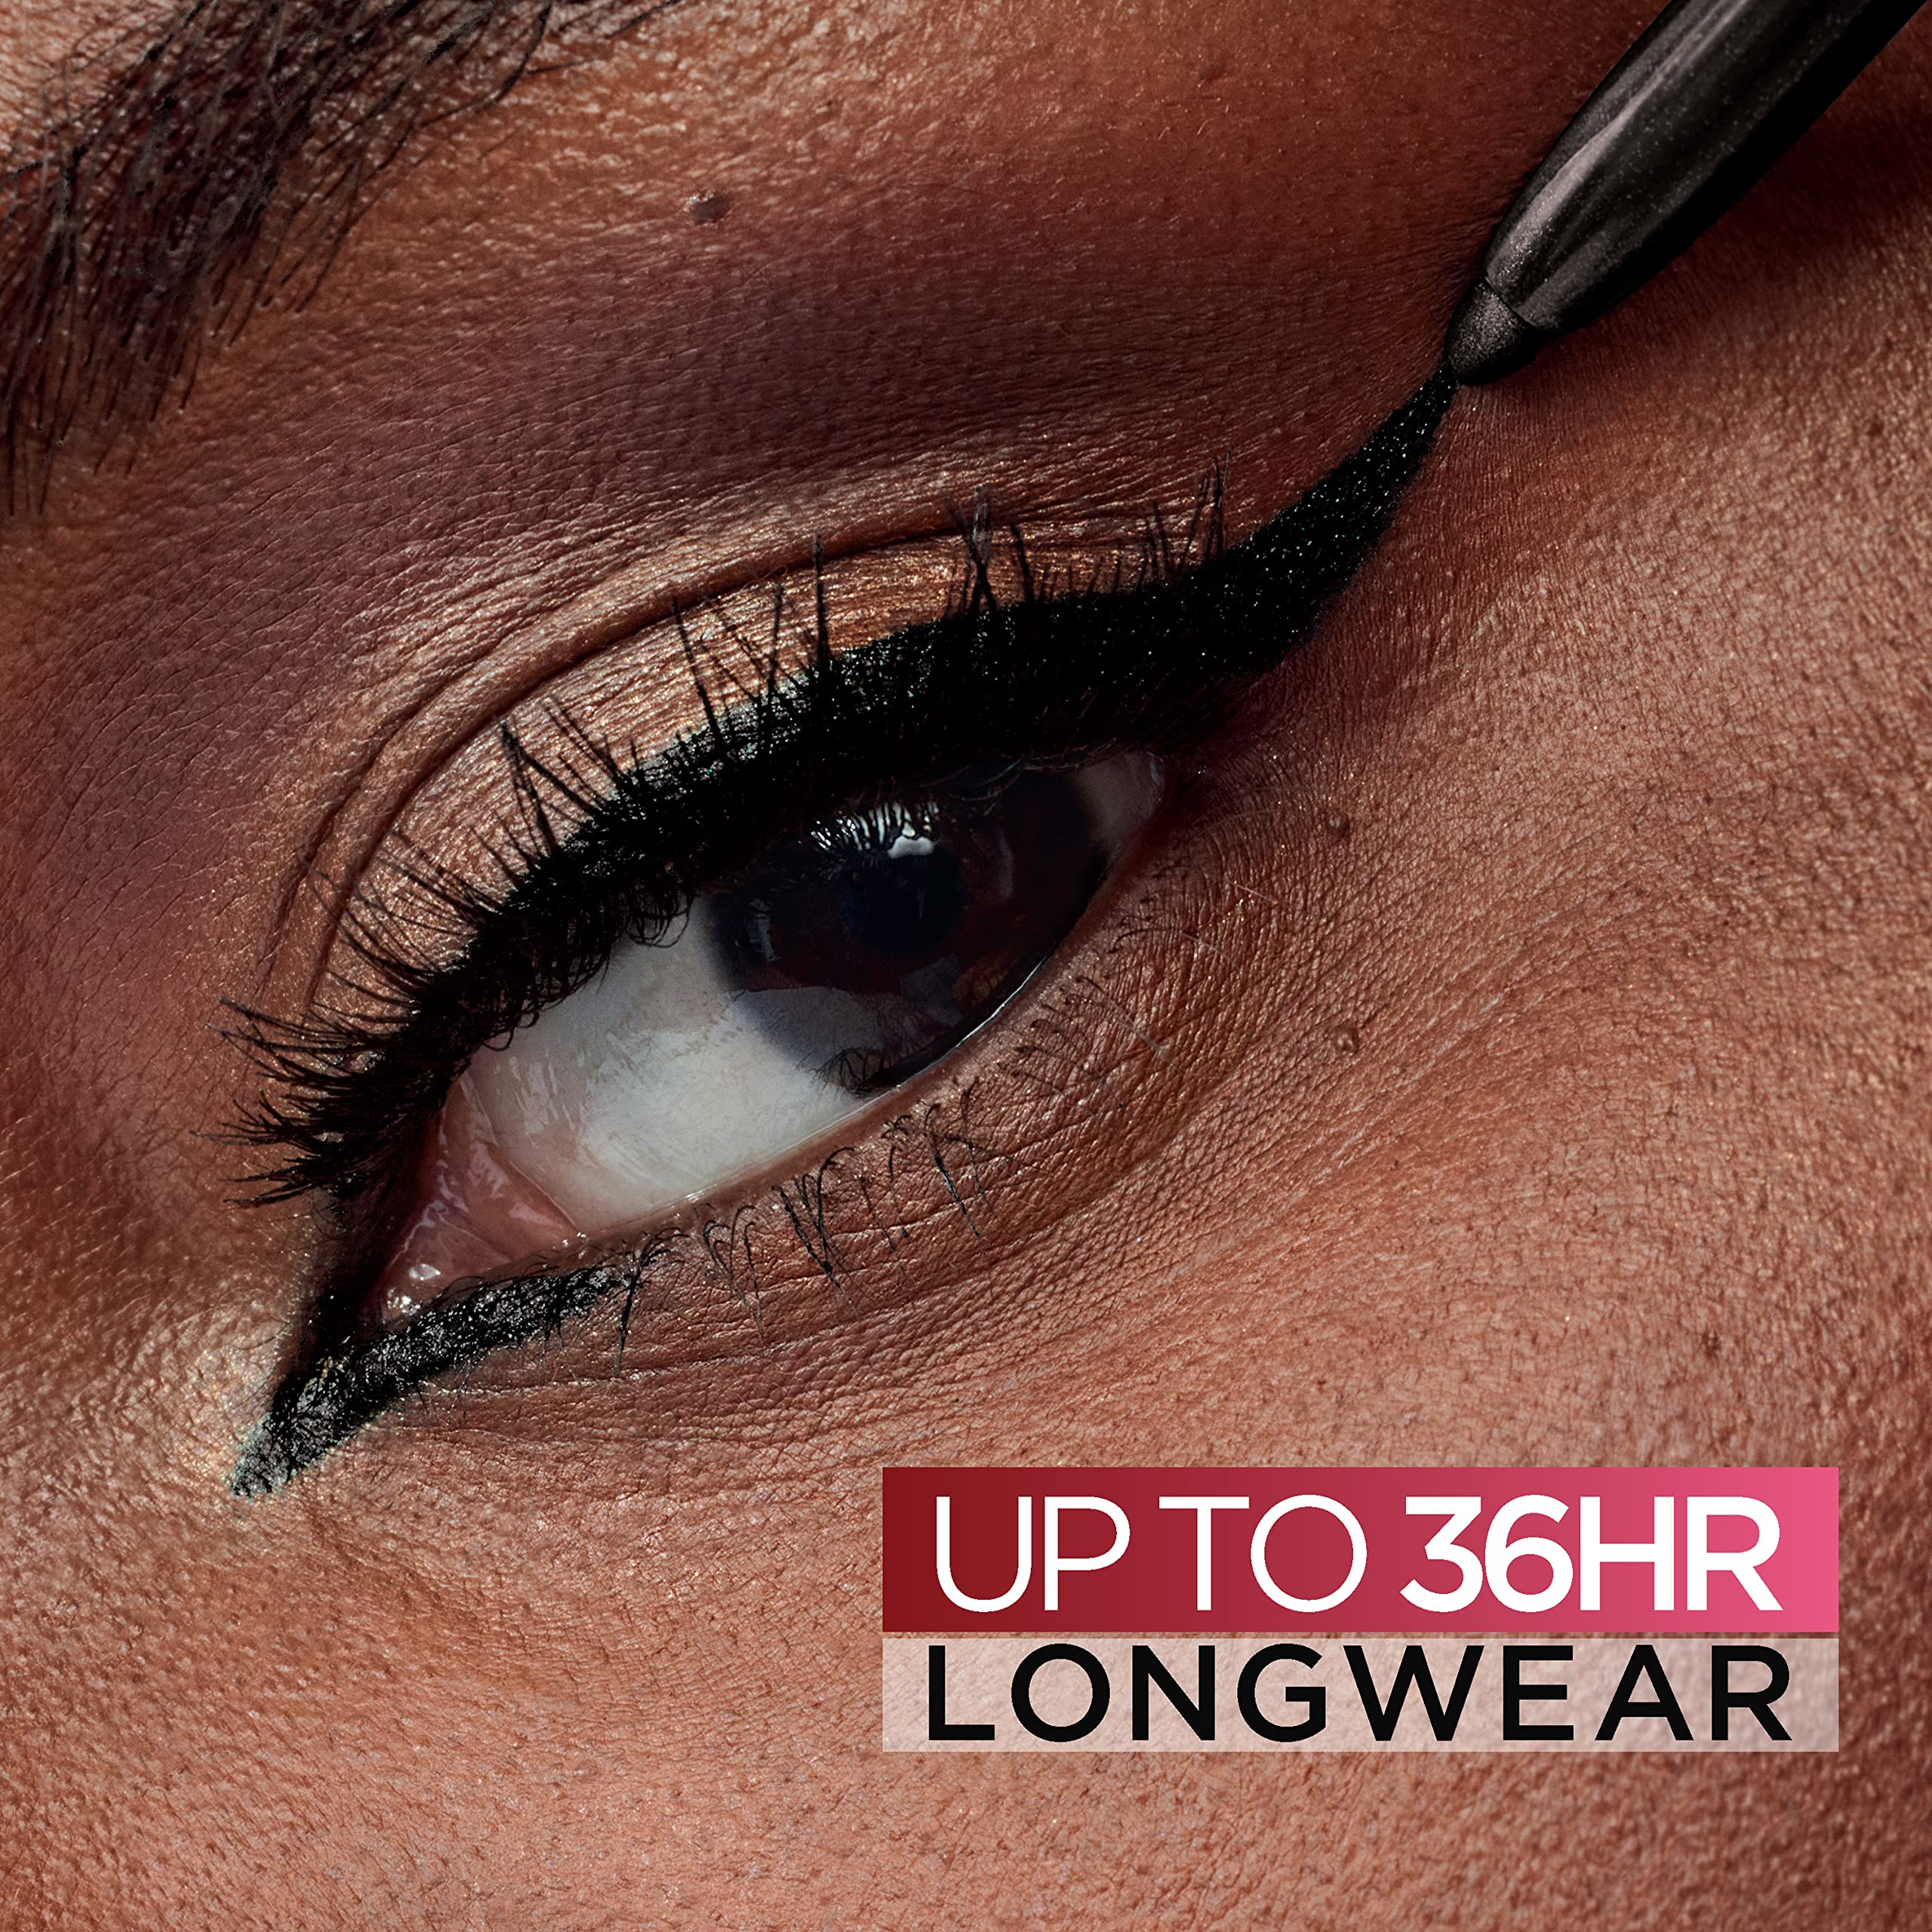 L’Oréal Paris Infallible Grip Mechanical Gel Eyeliner Pencil, Smudge-Resistant, Waterproof Eye Makeup with Up to 36HR Wear, Intense Black, 1 Kit